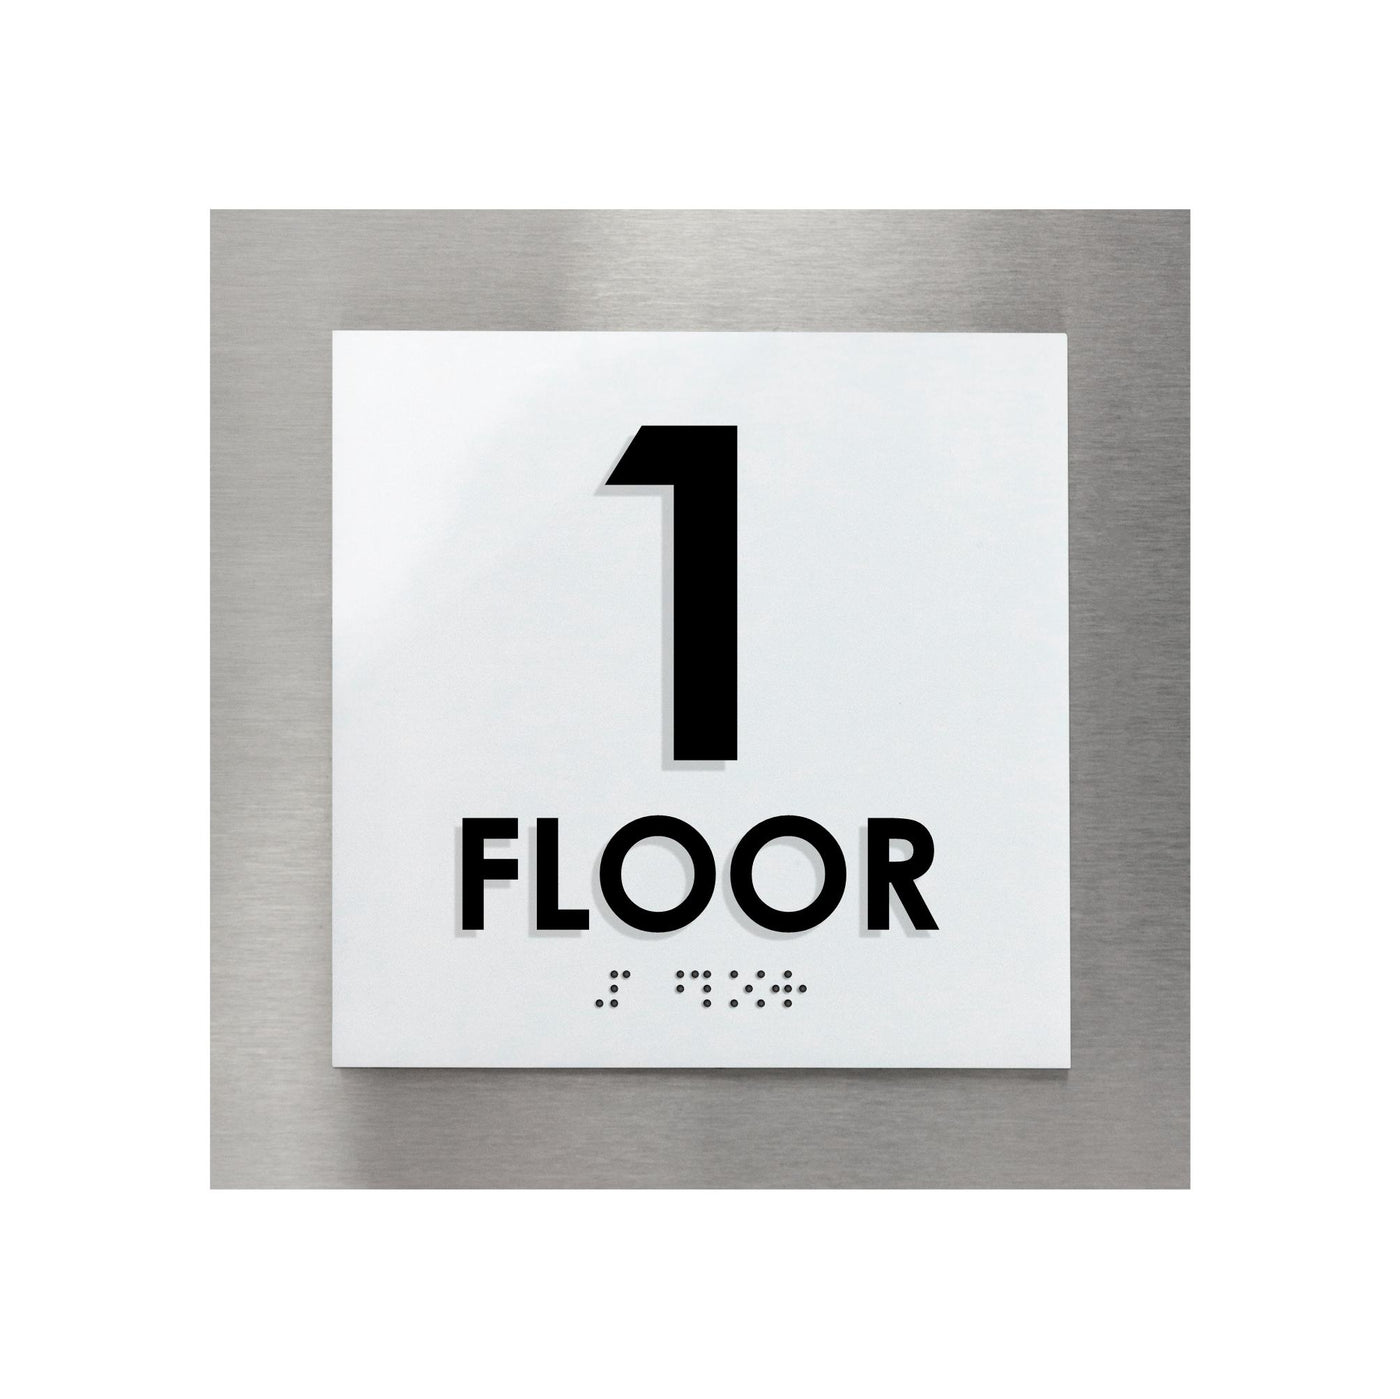 Floor Signs - Sign For 1st Floor - Interior Stainless Steel Sign - "Modern" Design